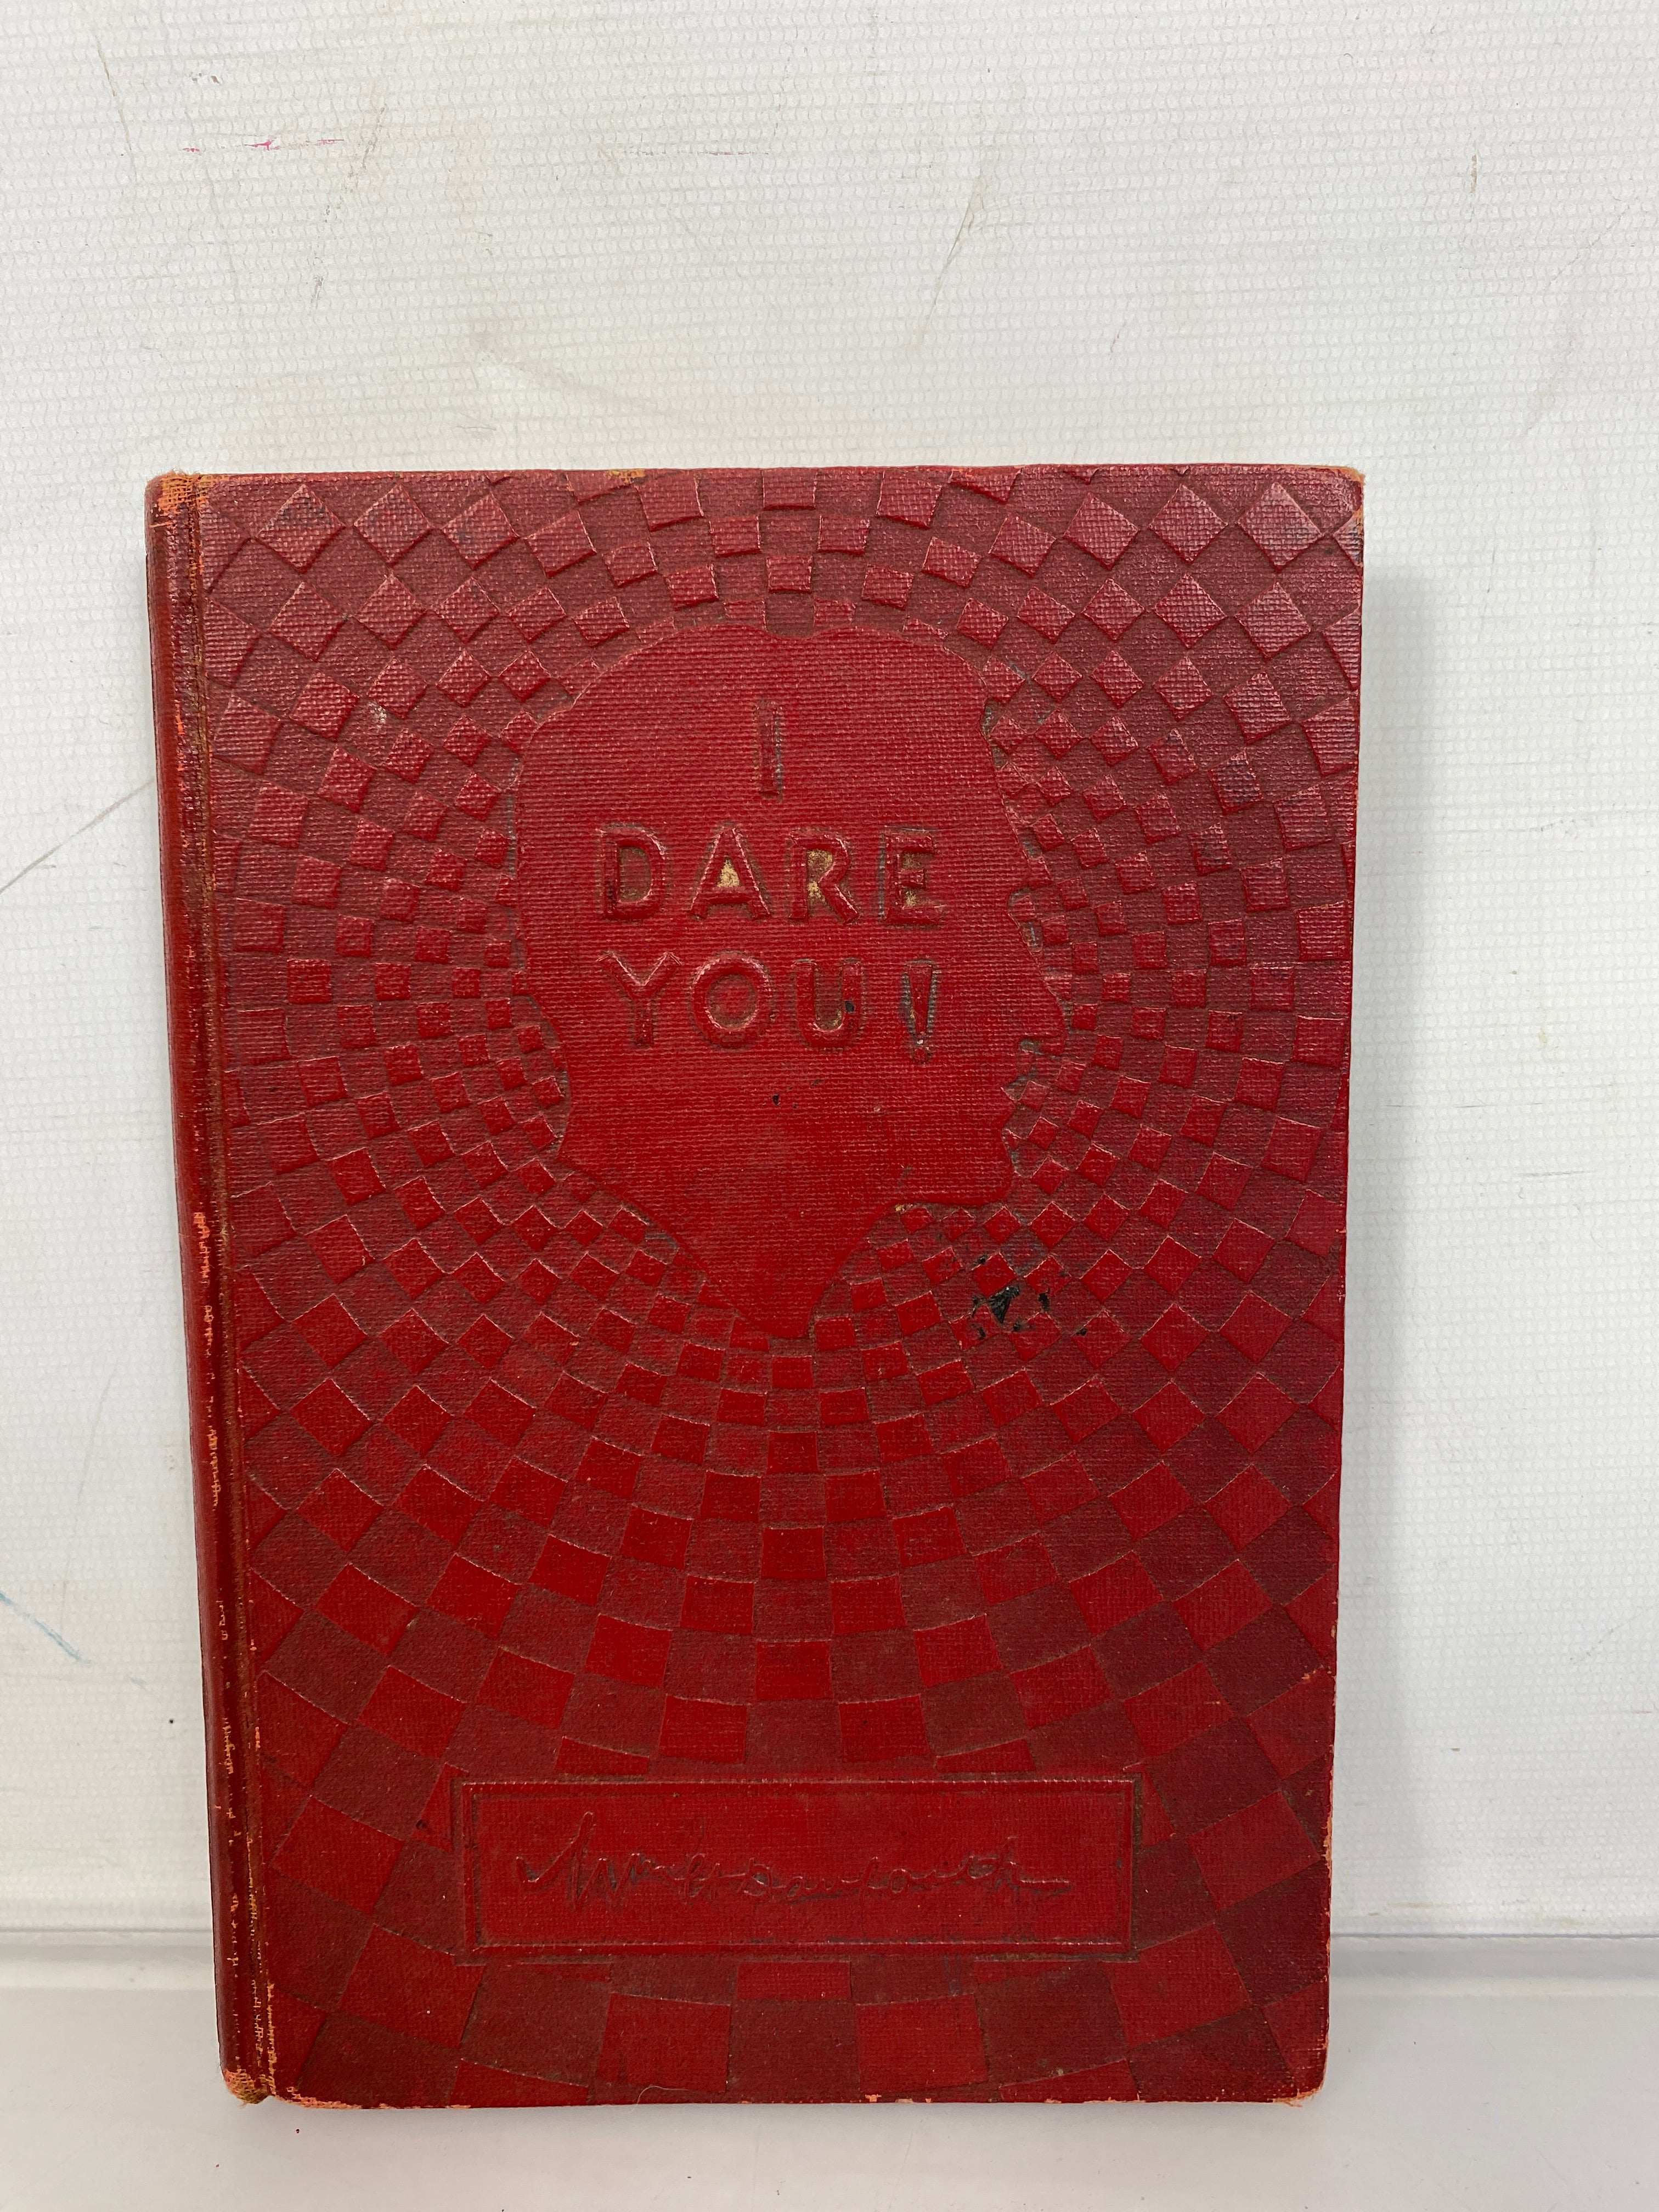 I Dare You! William Danforth (Ralston Purina) 1942 Eleventh Edition HC